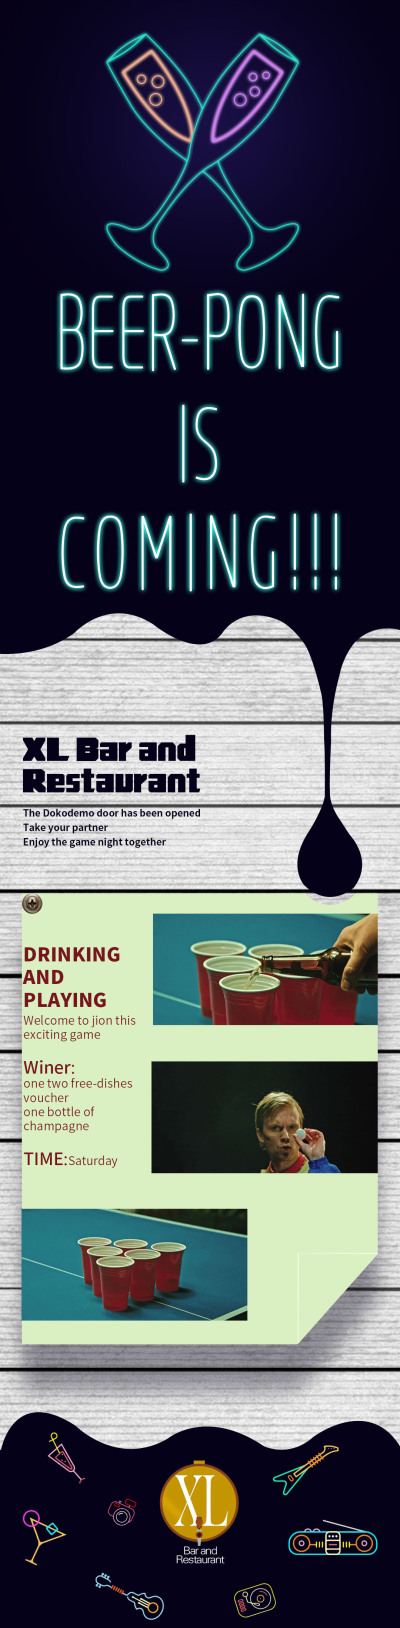 XL酒吧移动端海报设计